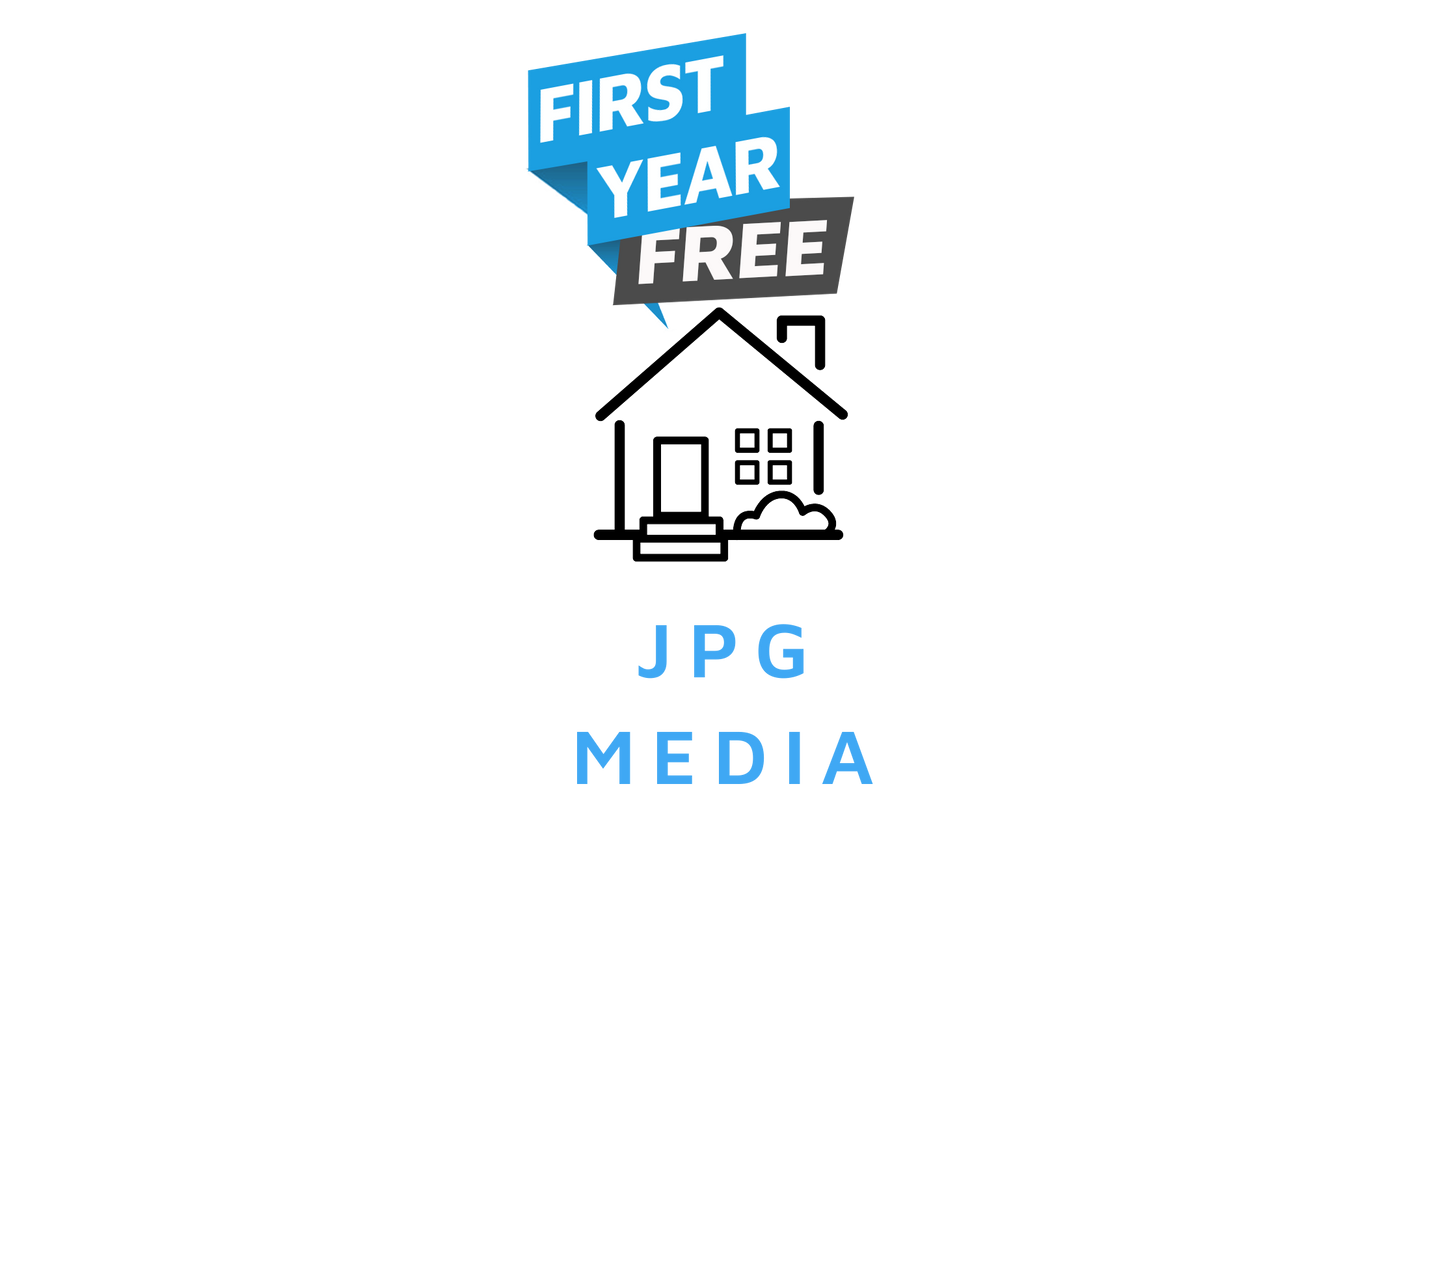 FIRST YEAR FREE - JPG Media - use code JPG5